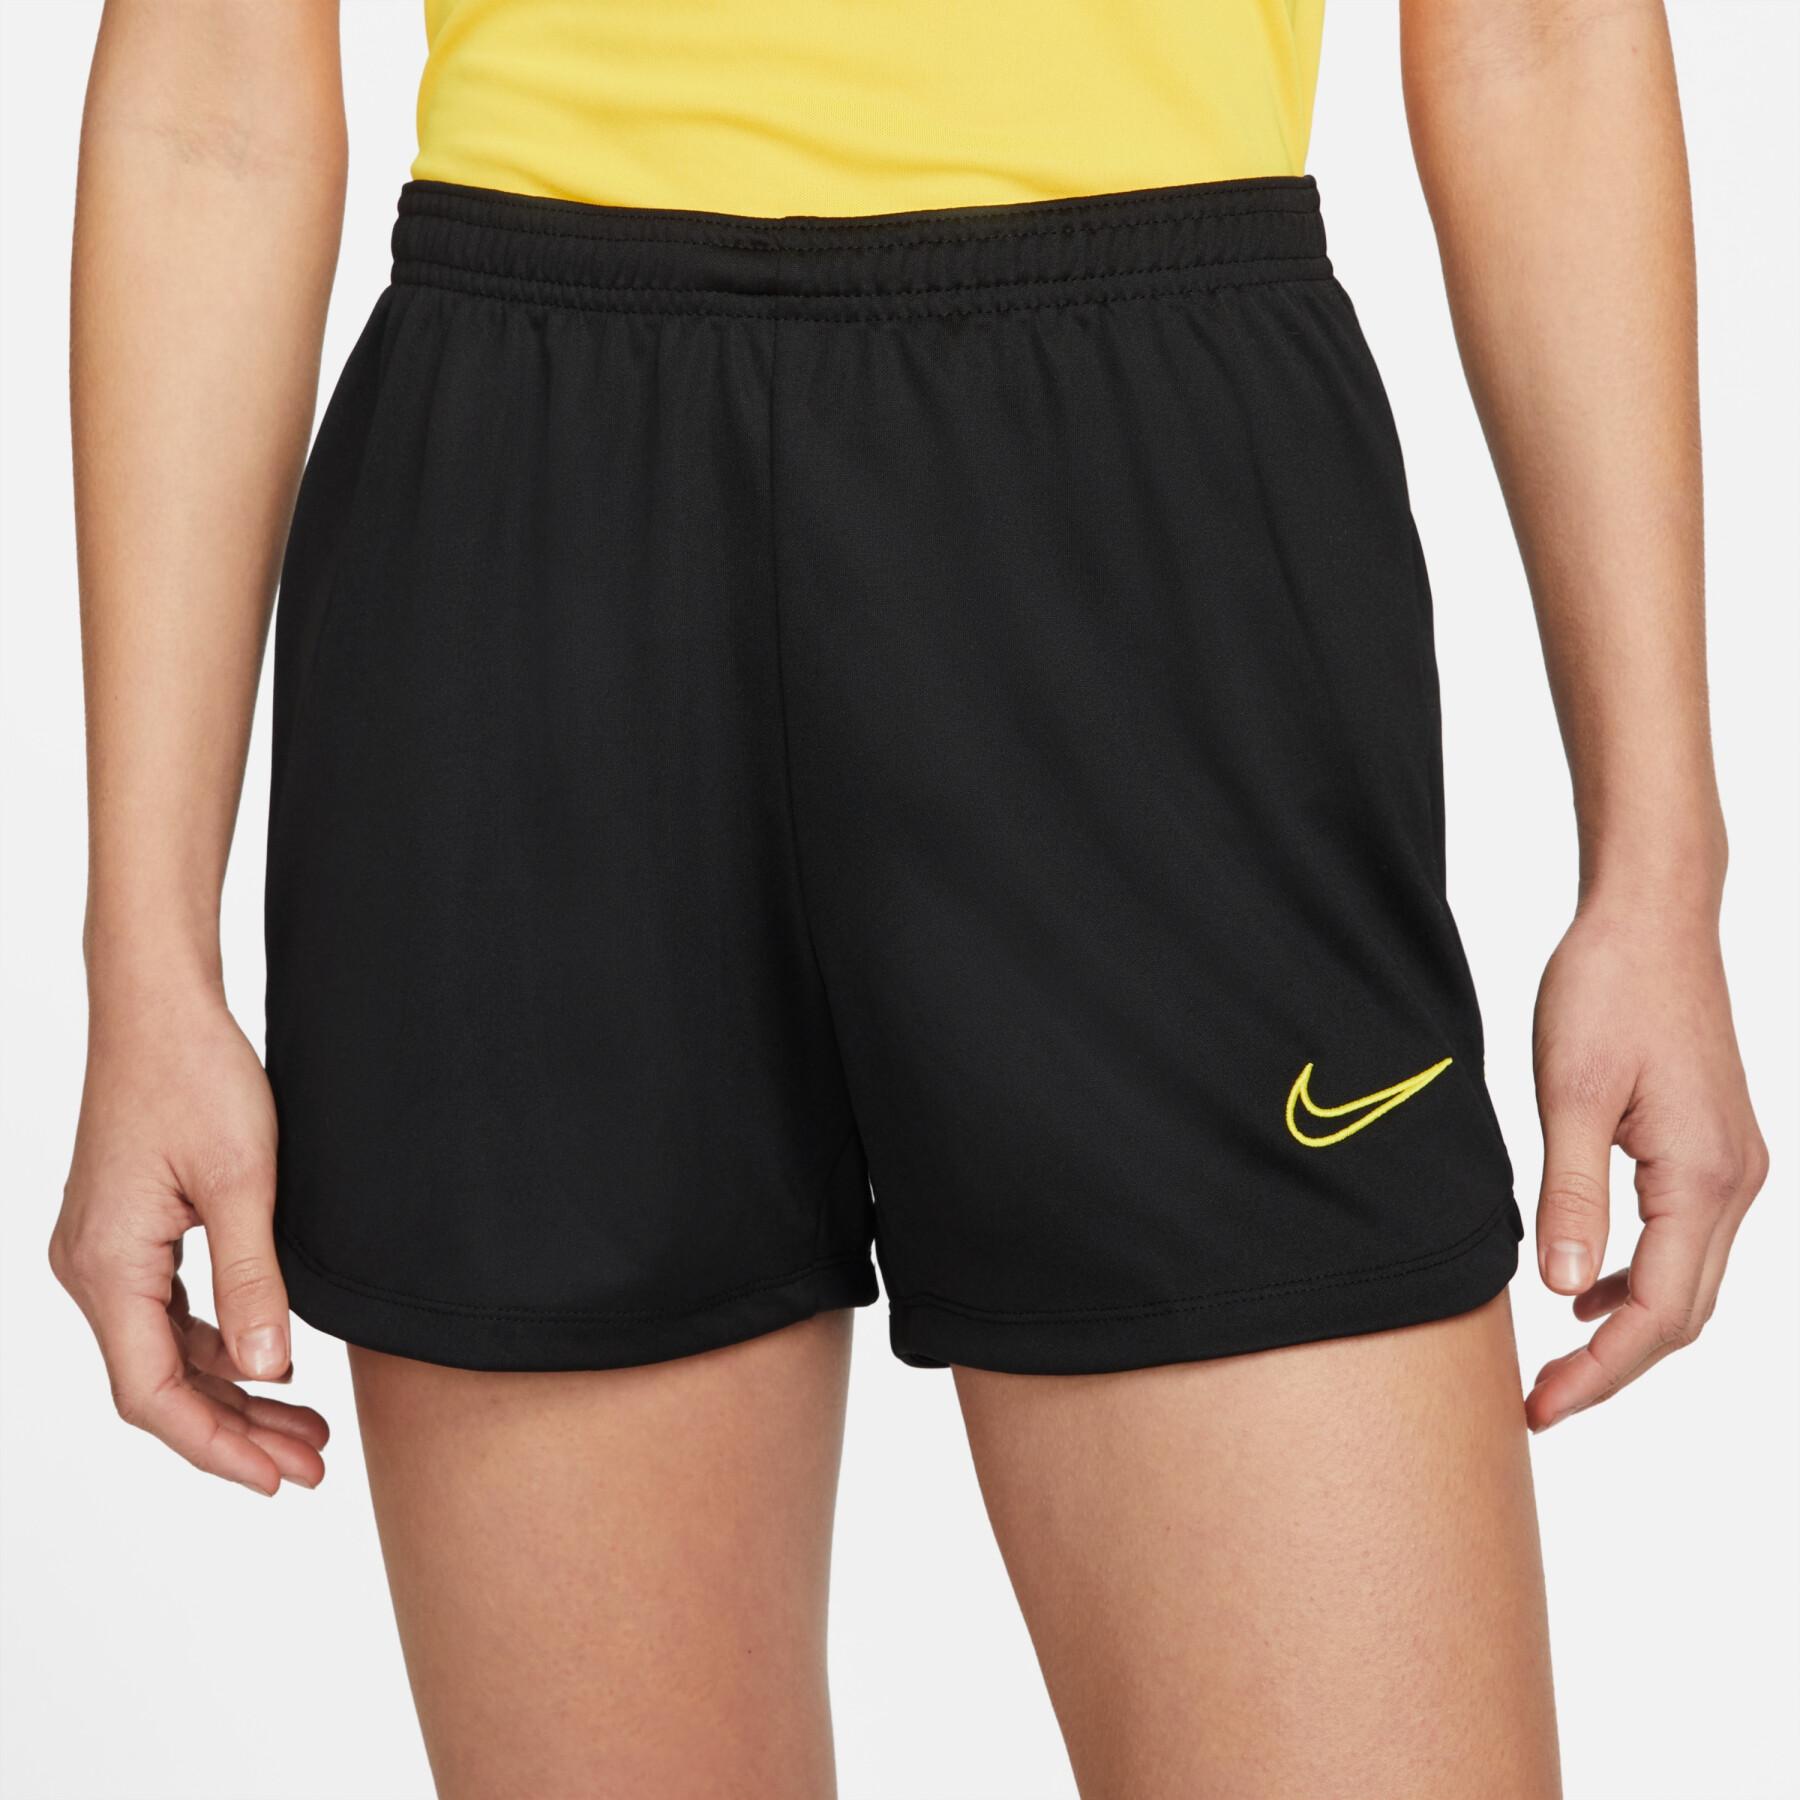 Women's shorts Nike Dri-FIT Academy